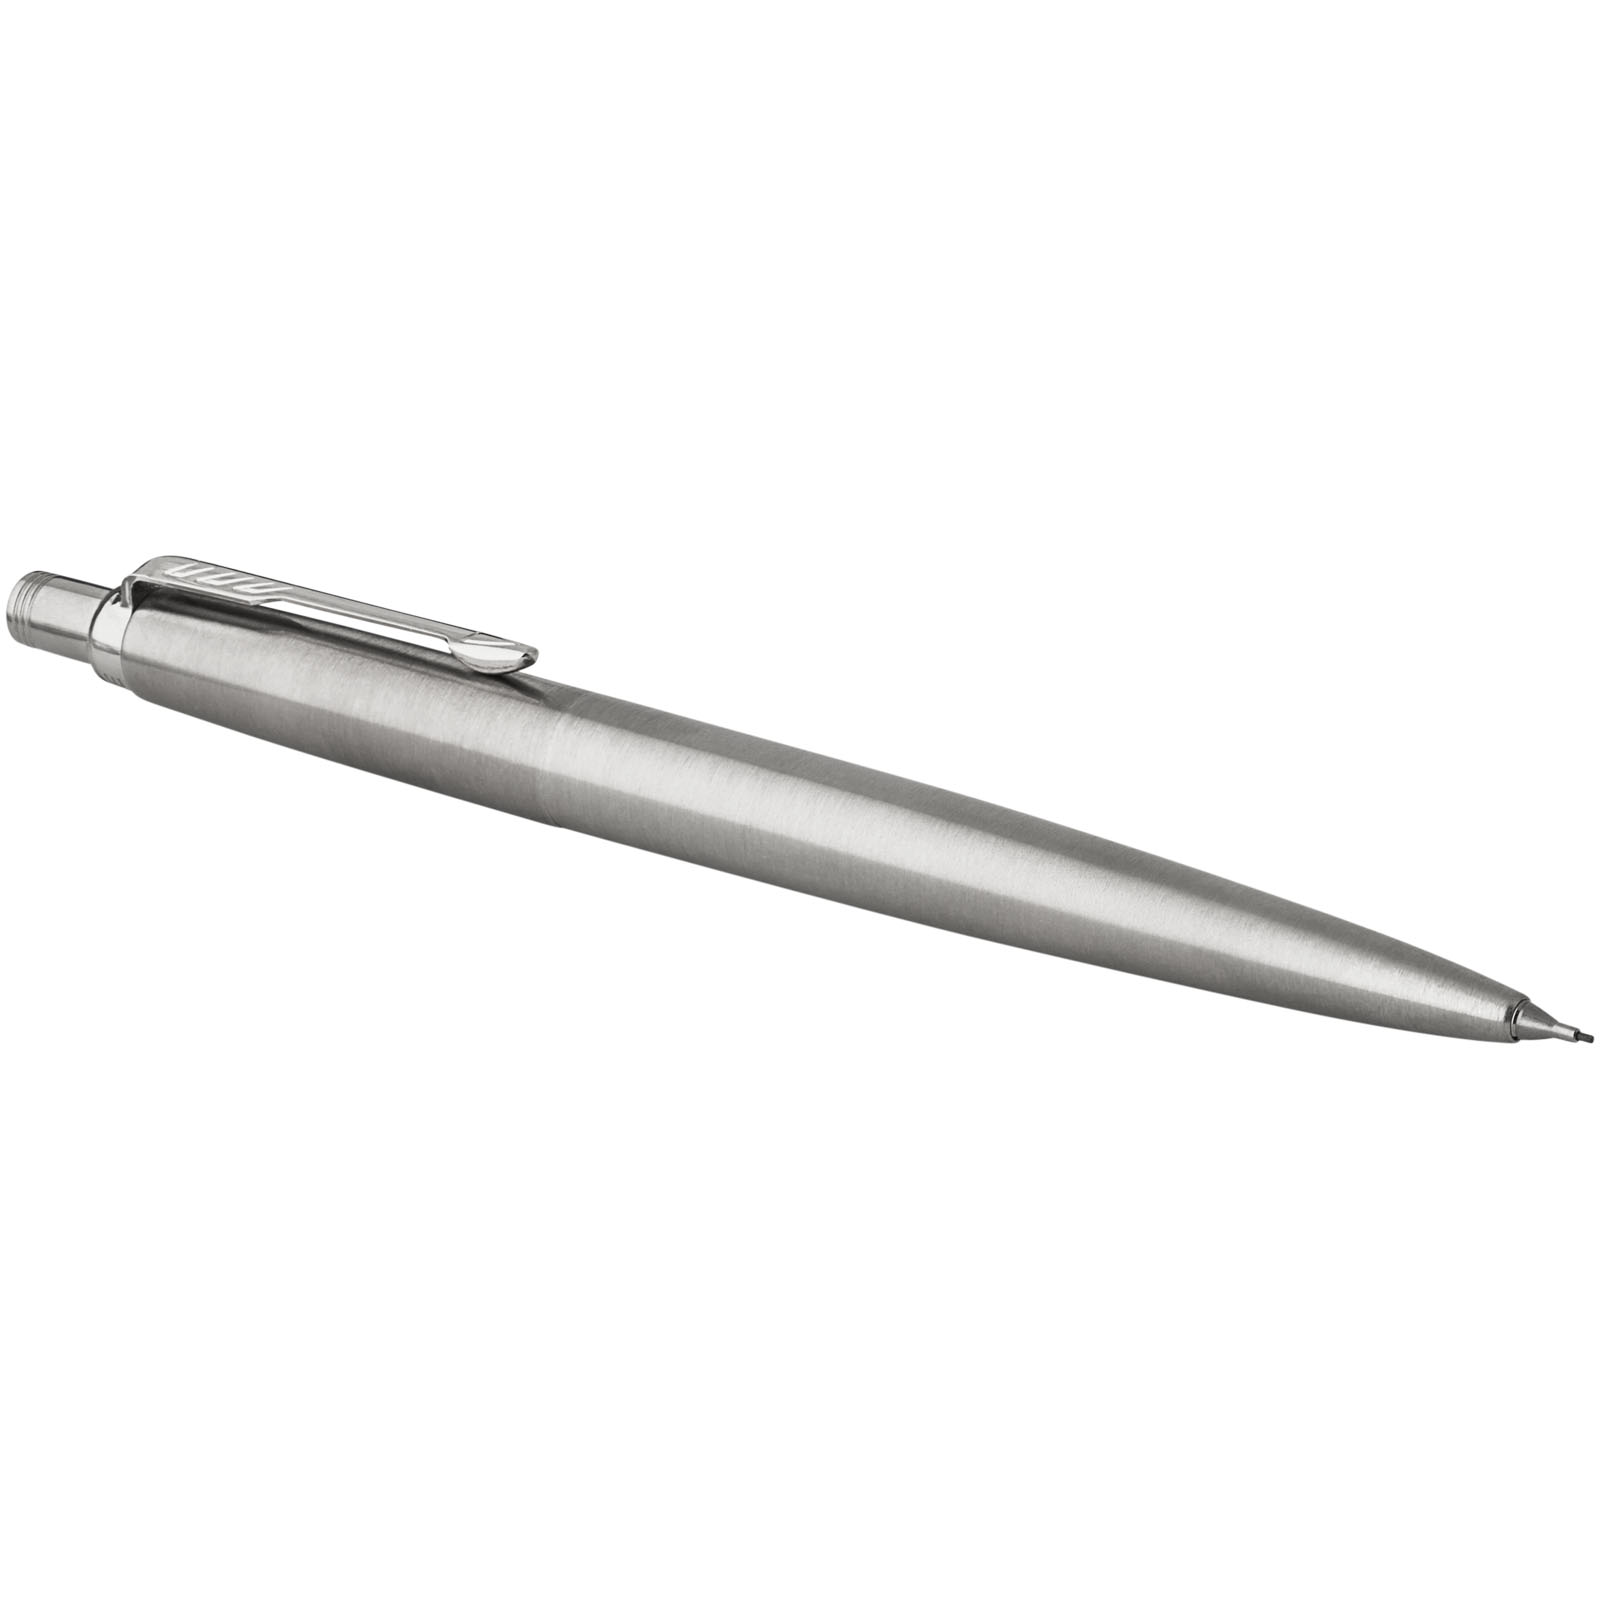 Advertising Pencils - Parker Jotter mechanical pencil with built-in eraser - 3